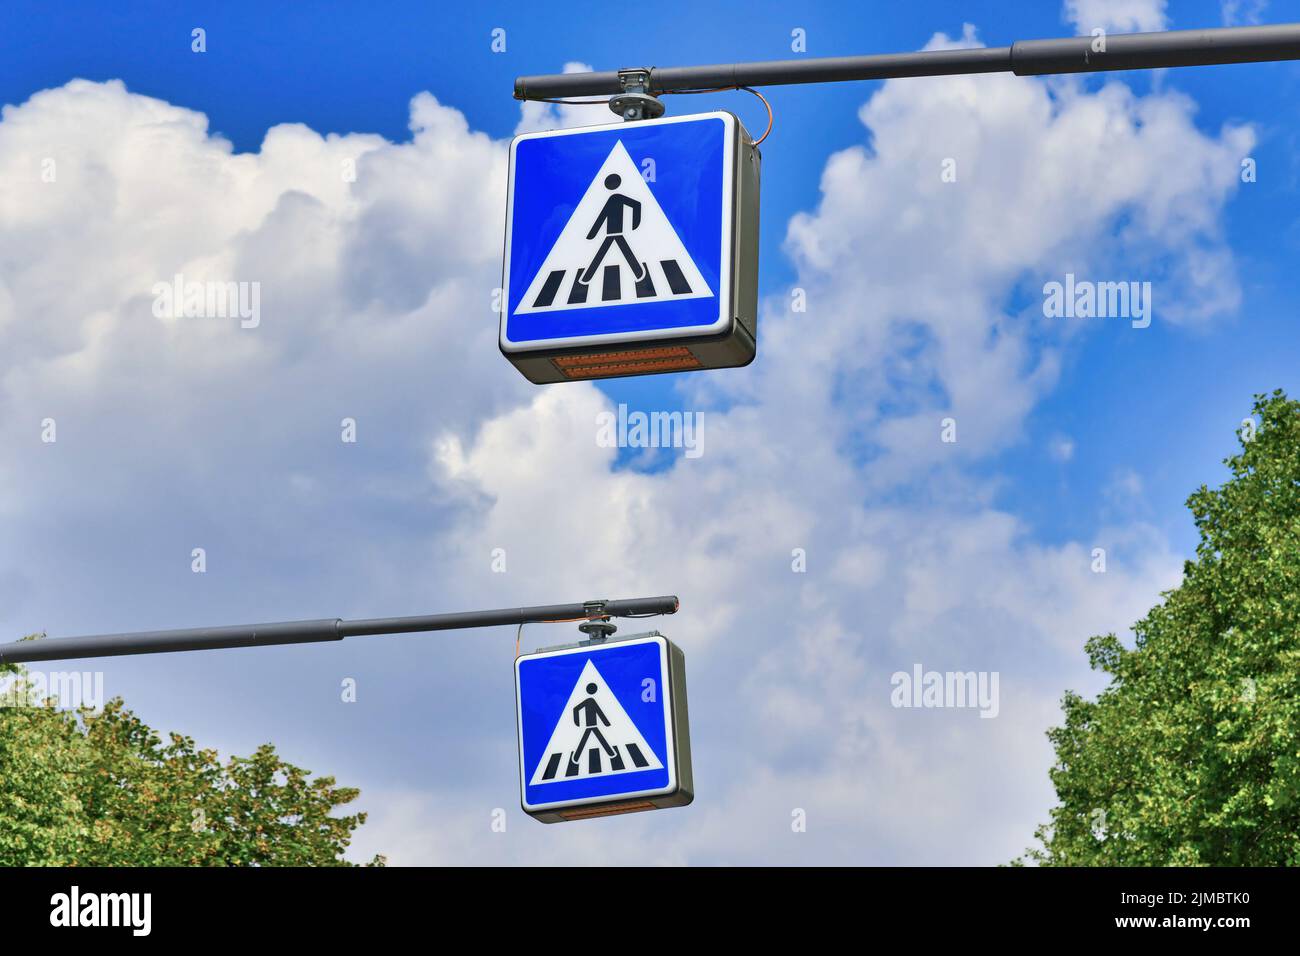 Zebra pedestrian crossing street traffic signs in front of sky Stock Photo